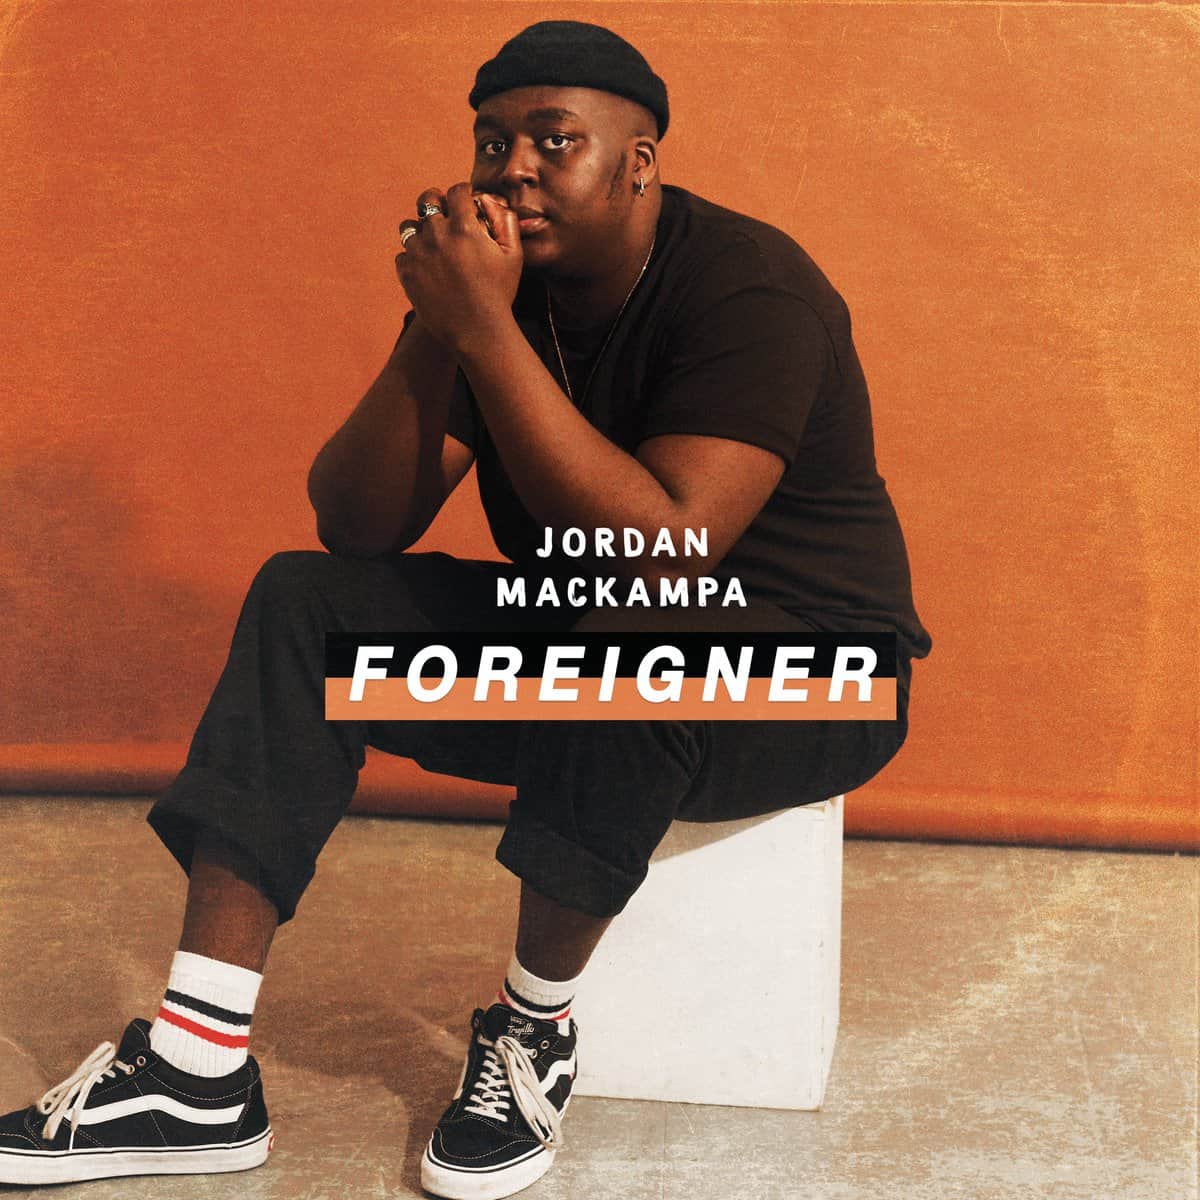 Jordan Mackampa's debut album 'Foreigner' is out March 13, 2020